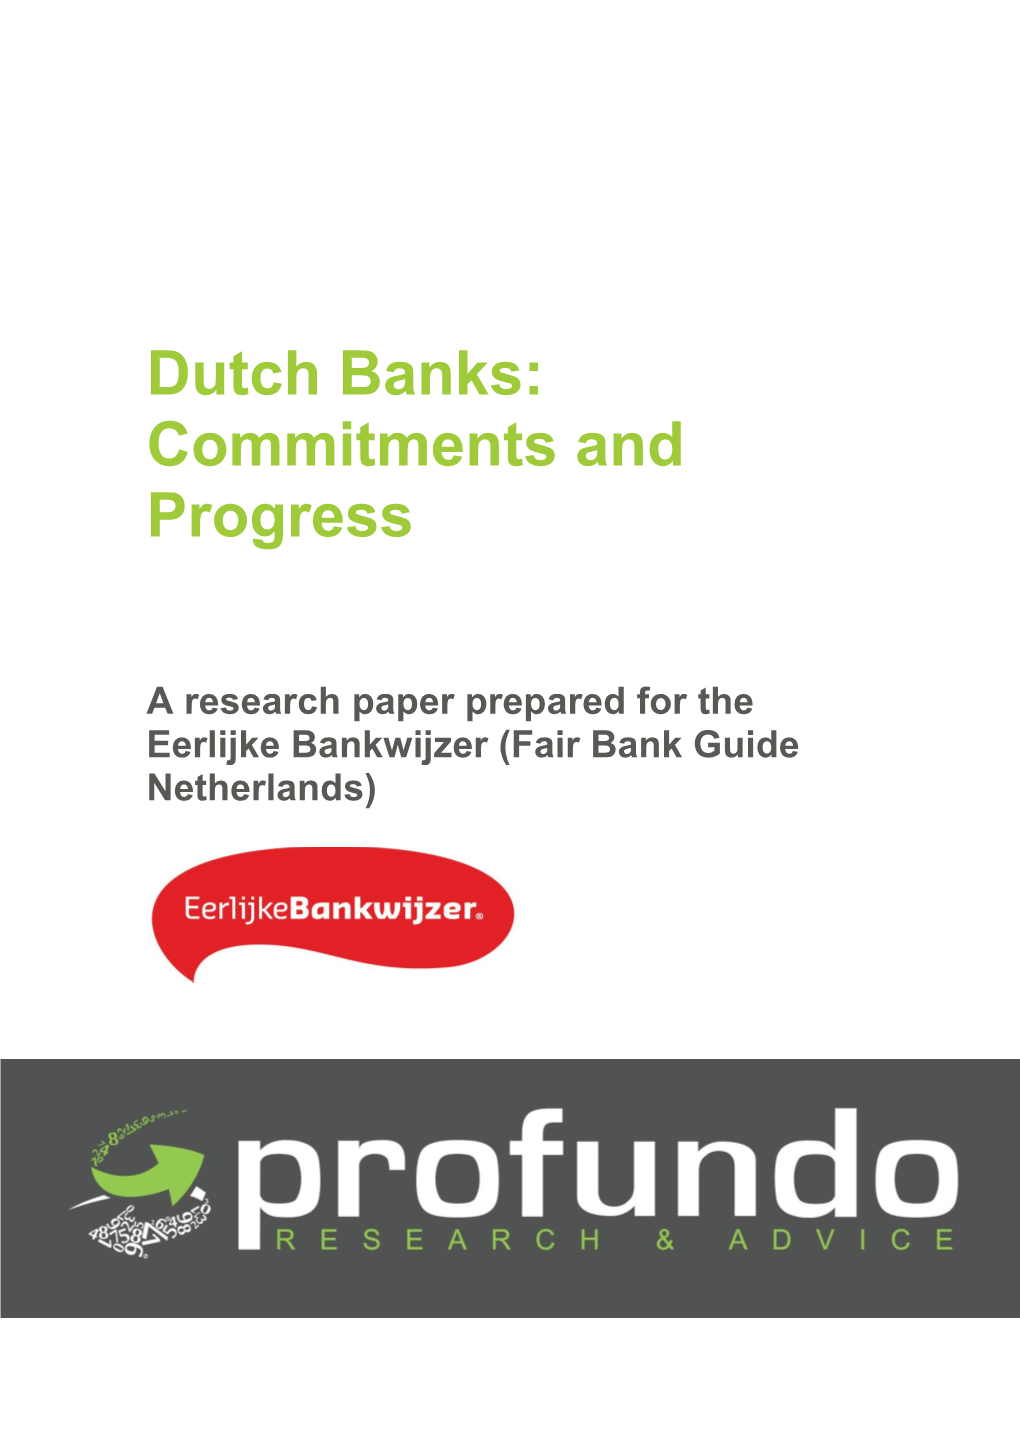 Dutch Banks: Commitments and Progress